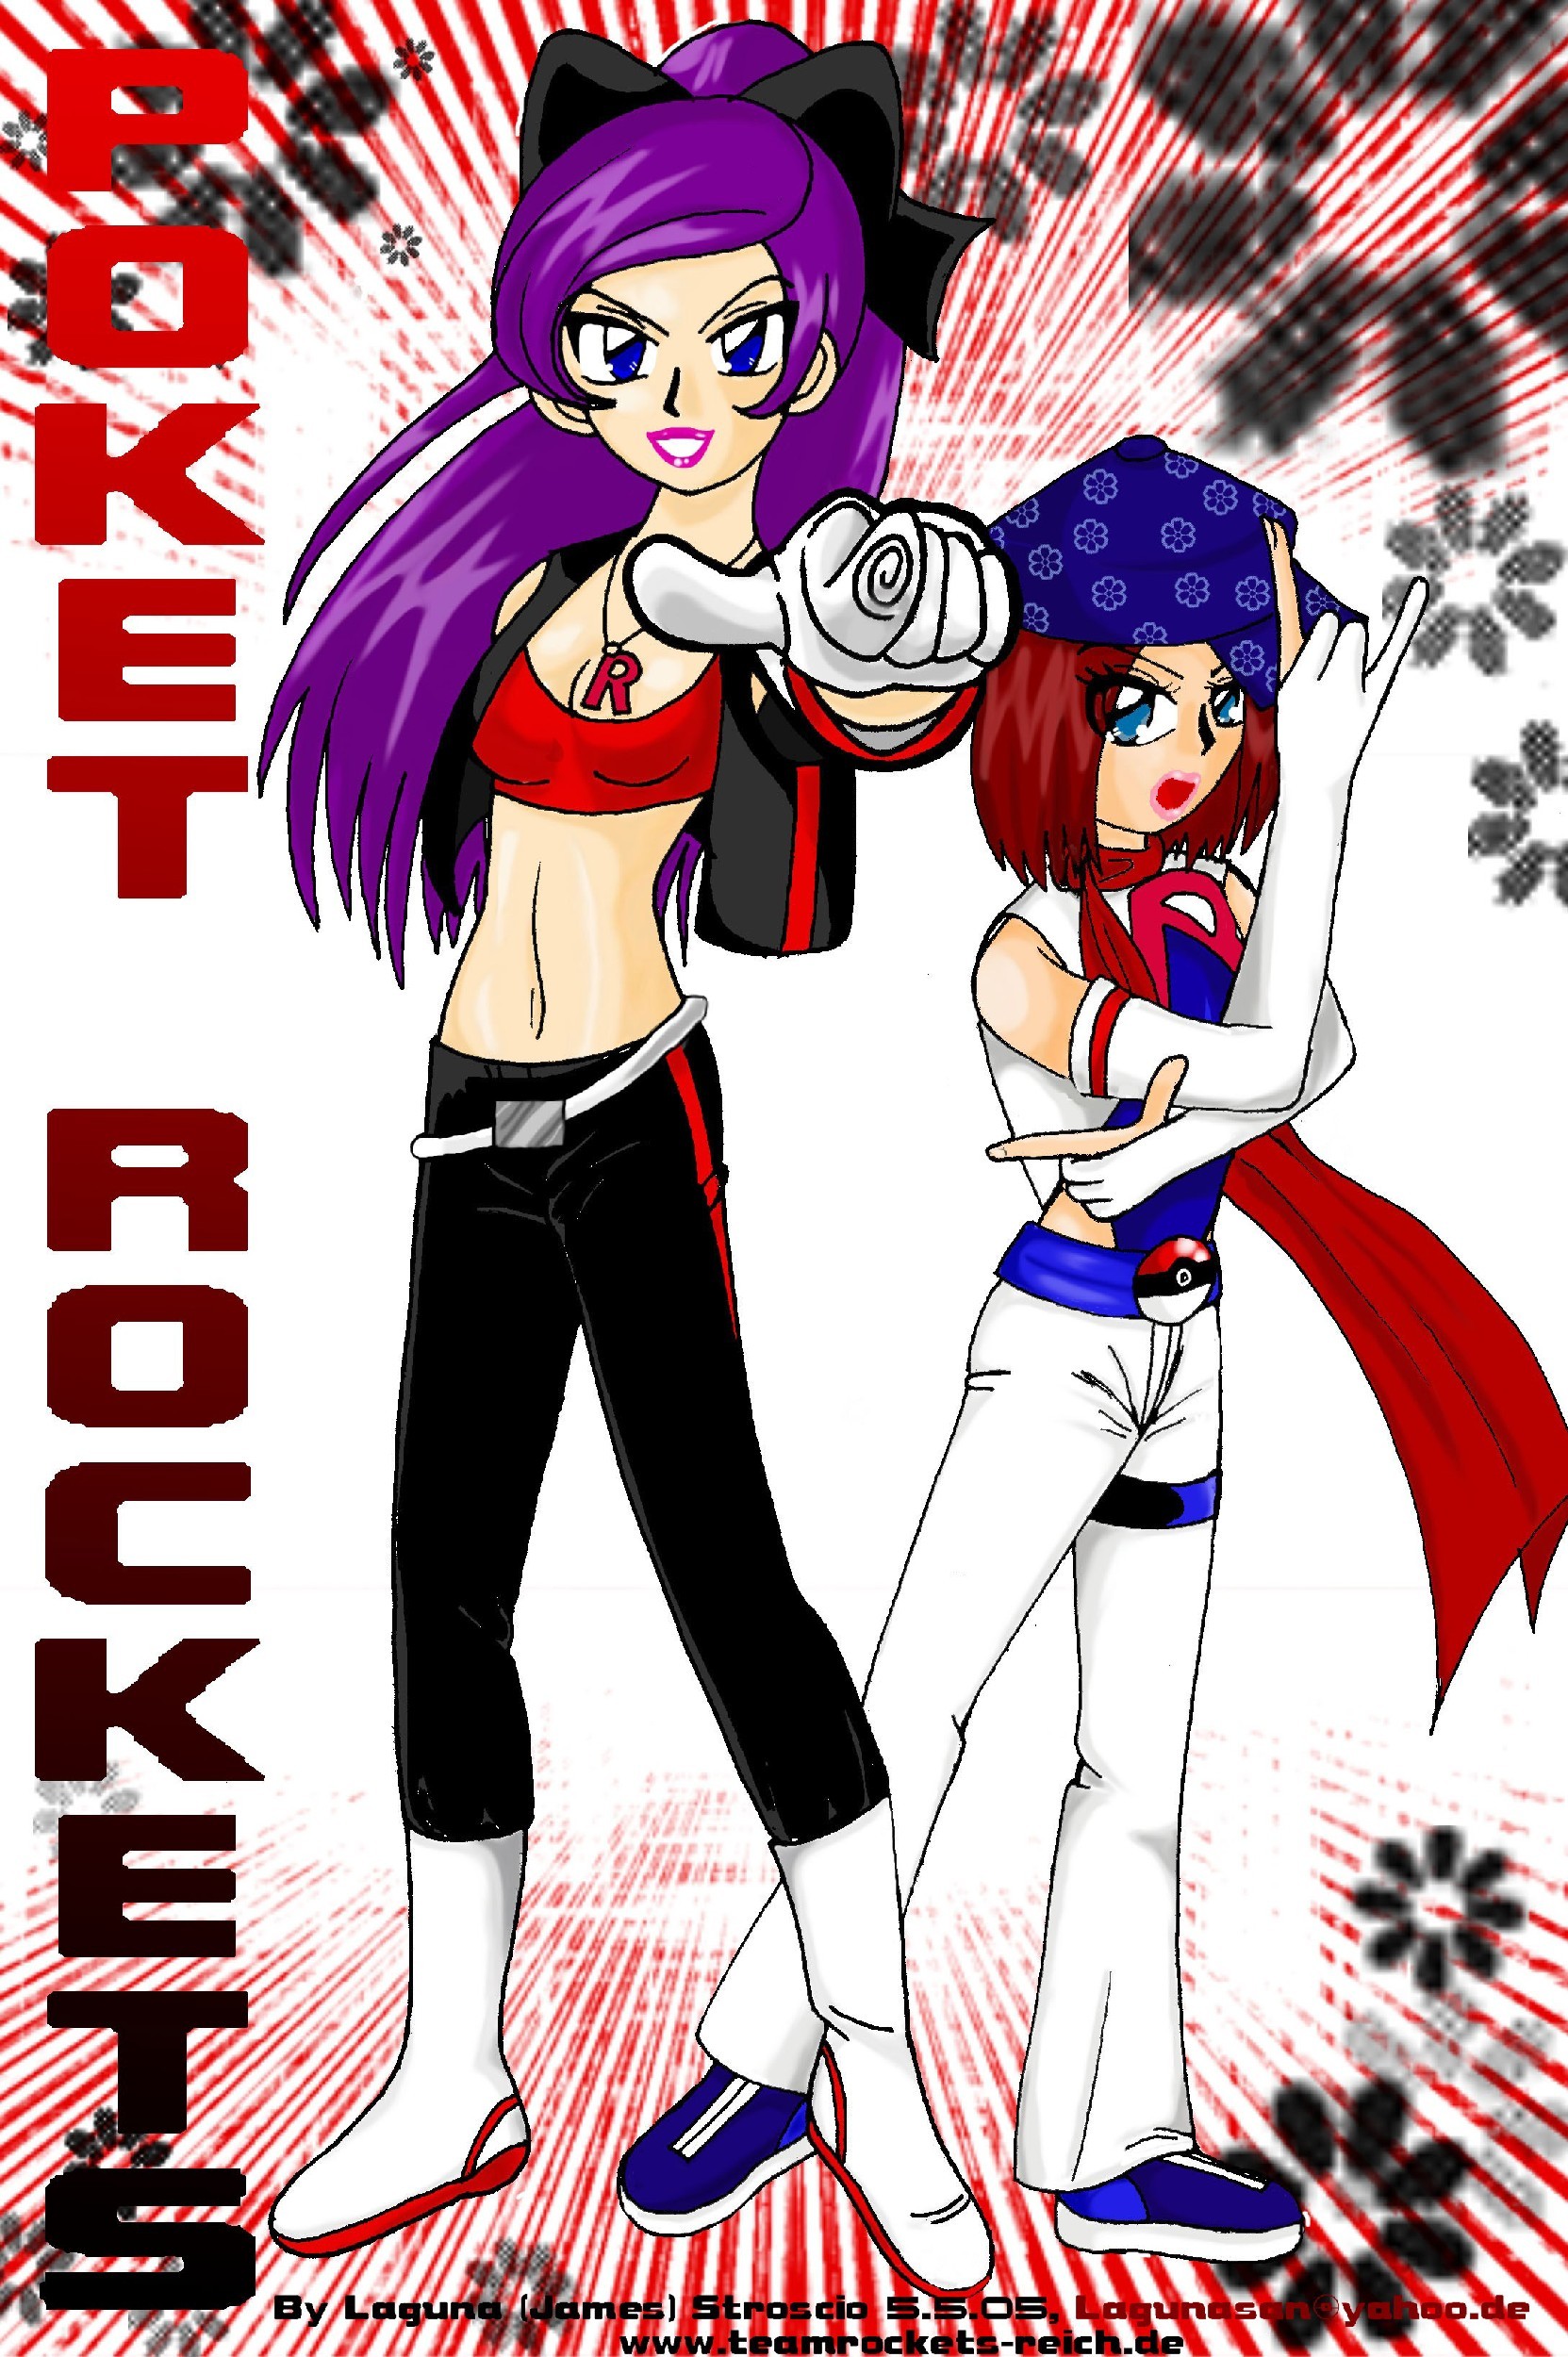 Pocket Rocket by Kojiro